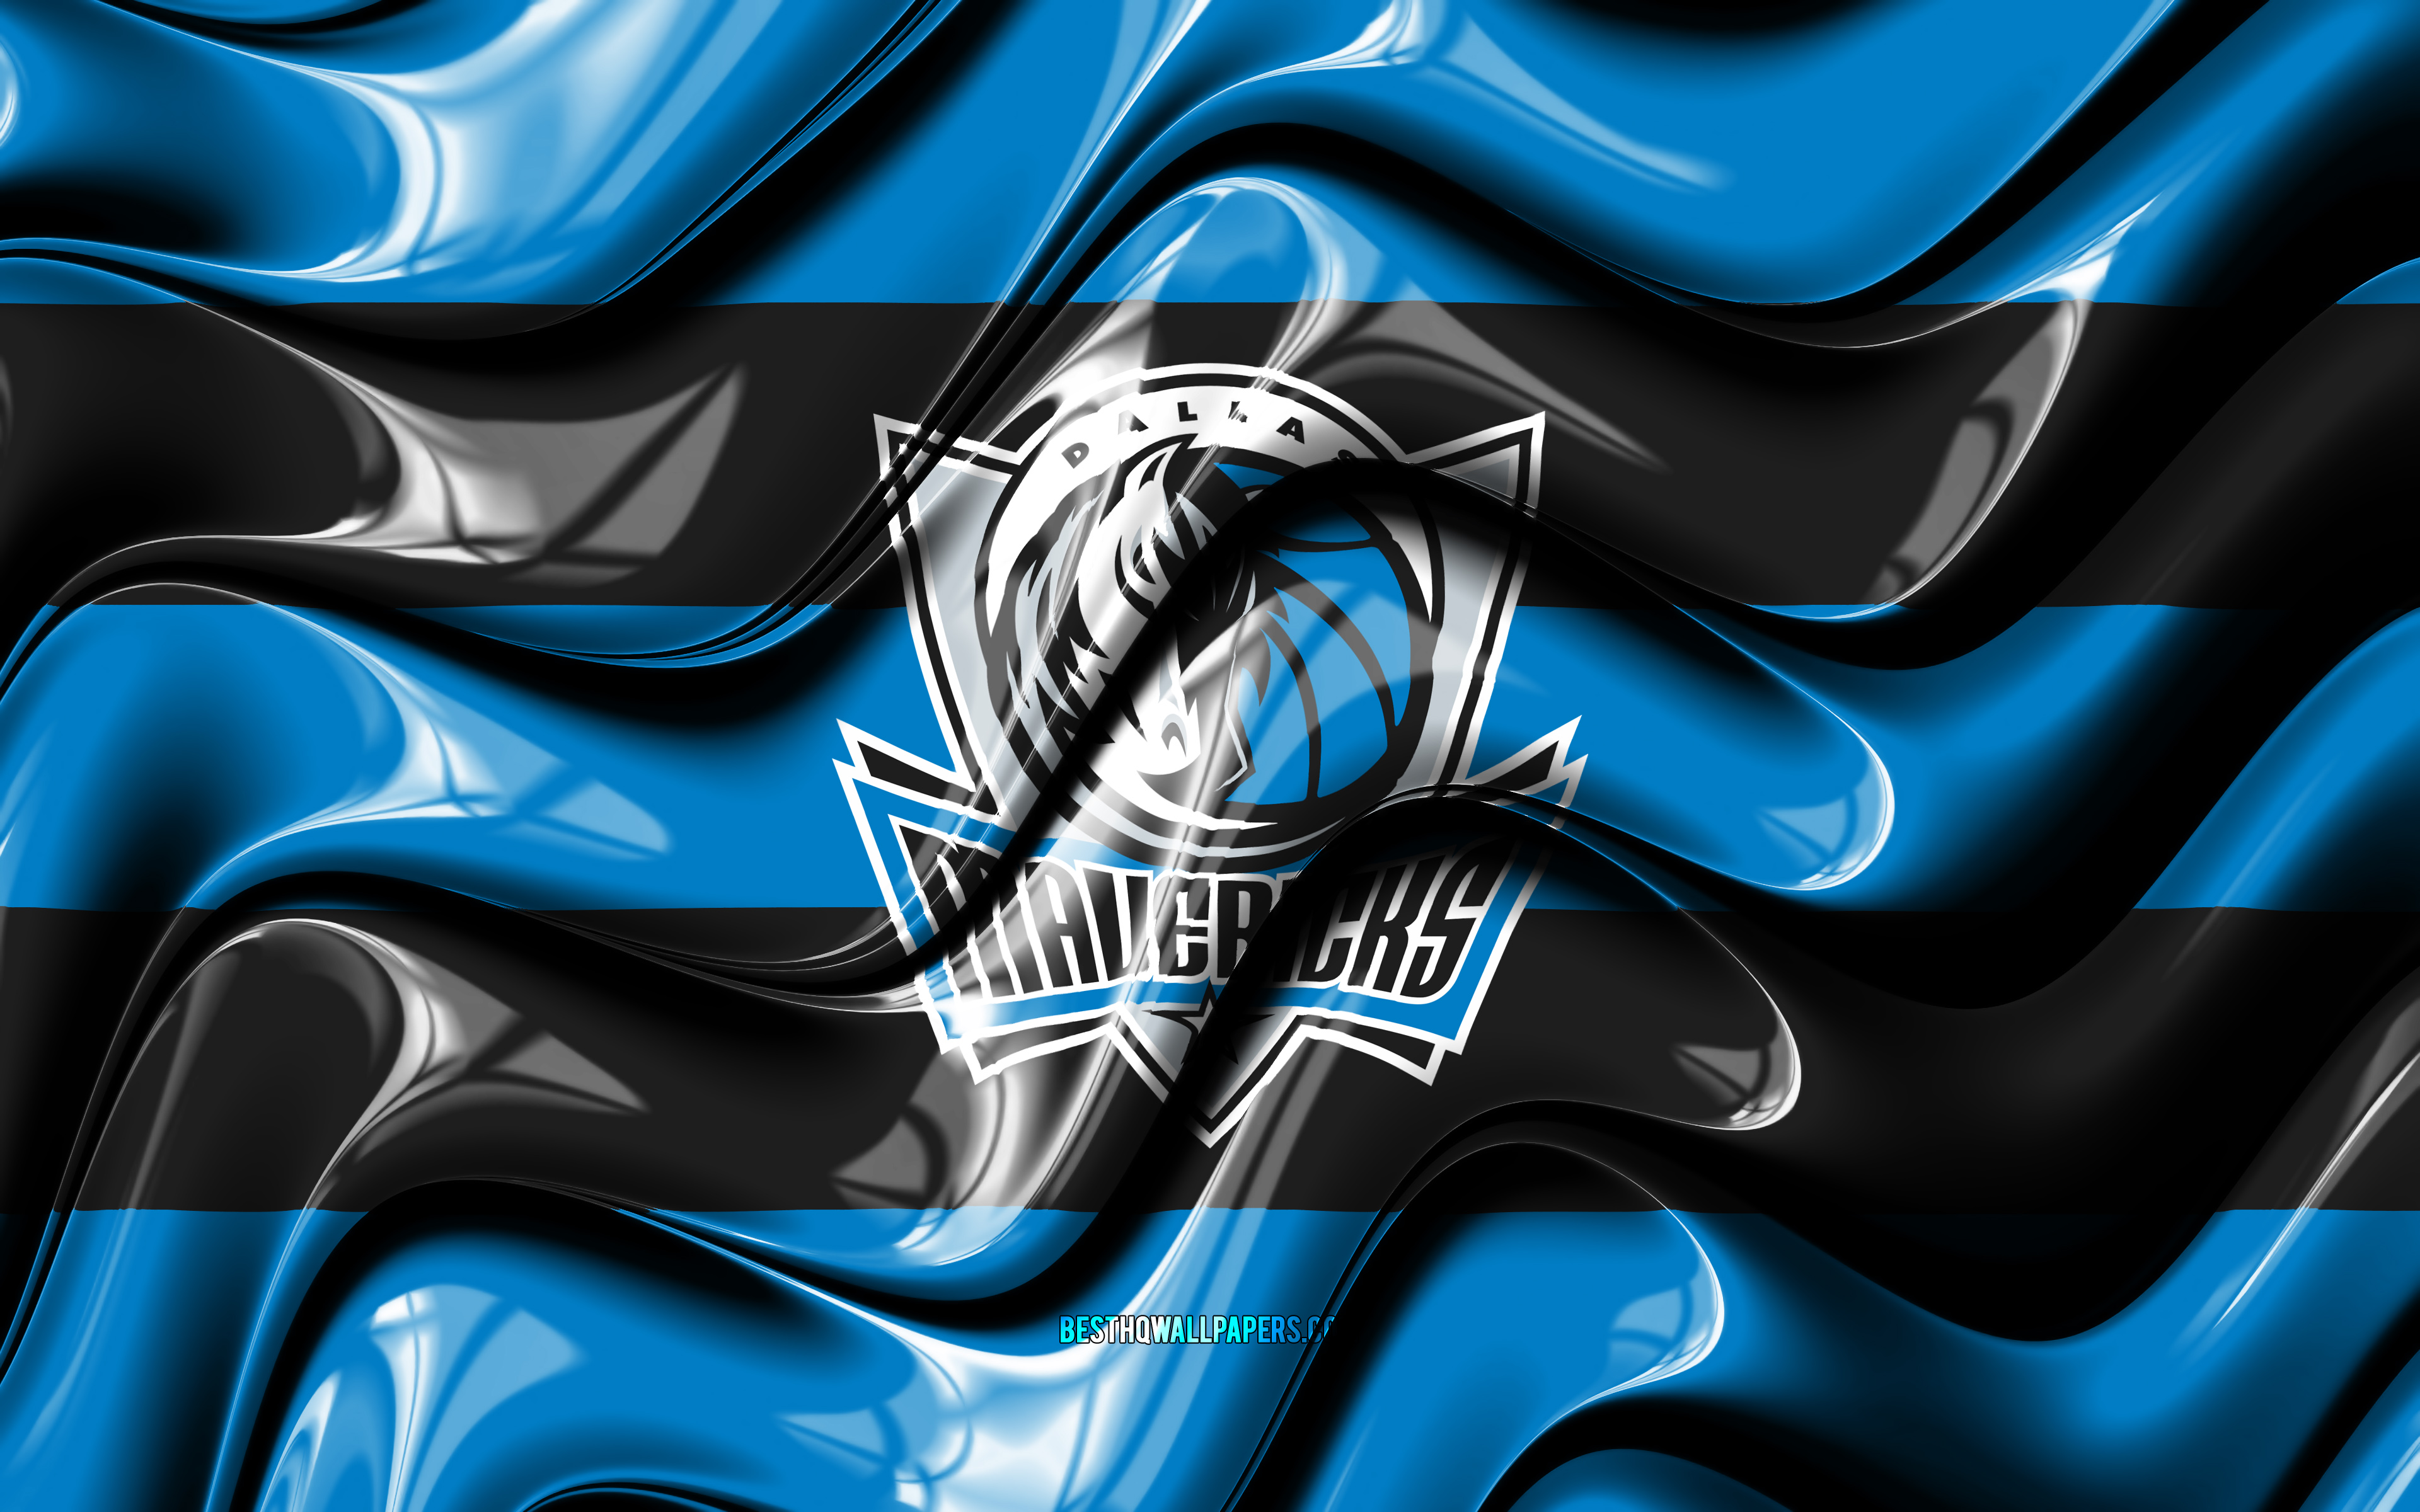 Download wallpapers Dallas Mavericks flag, 4k, blue and black 3D waves